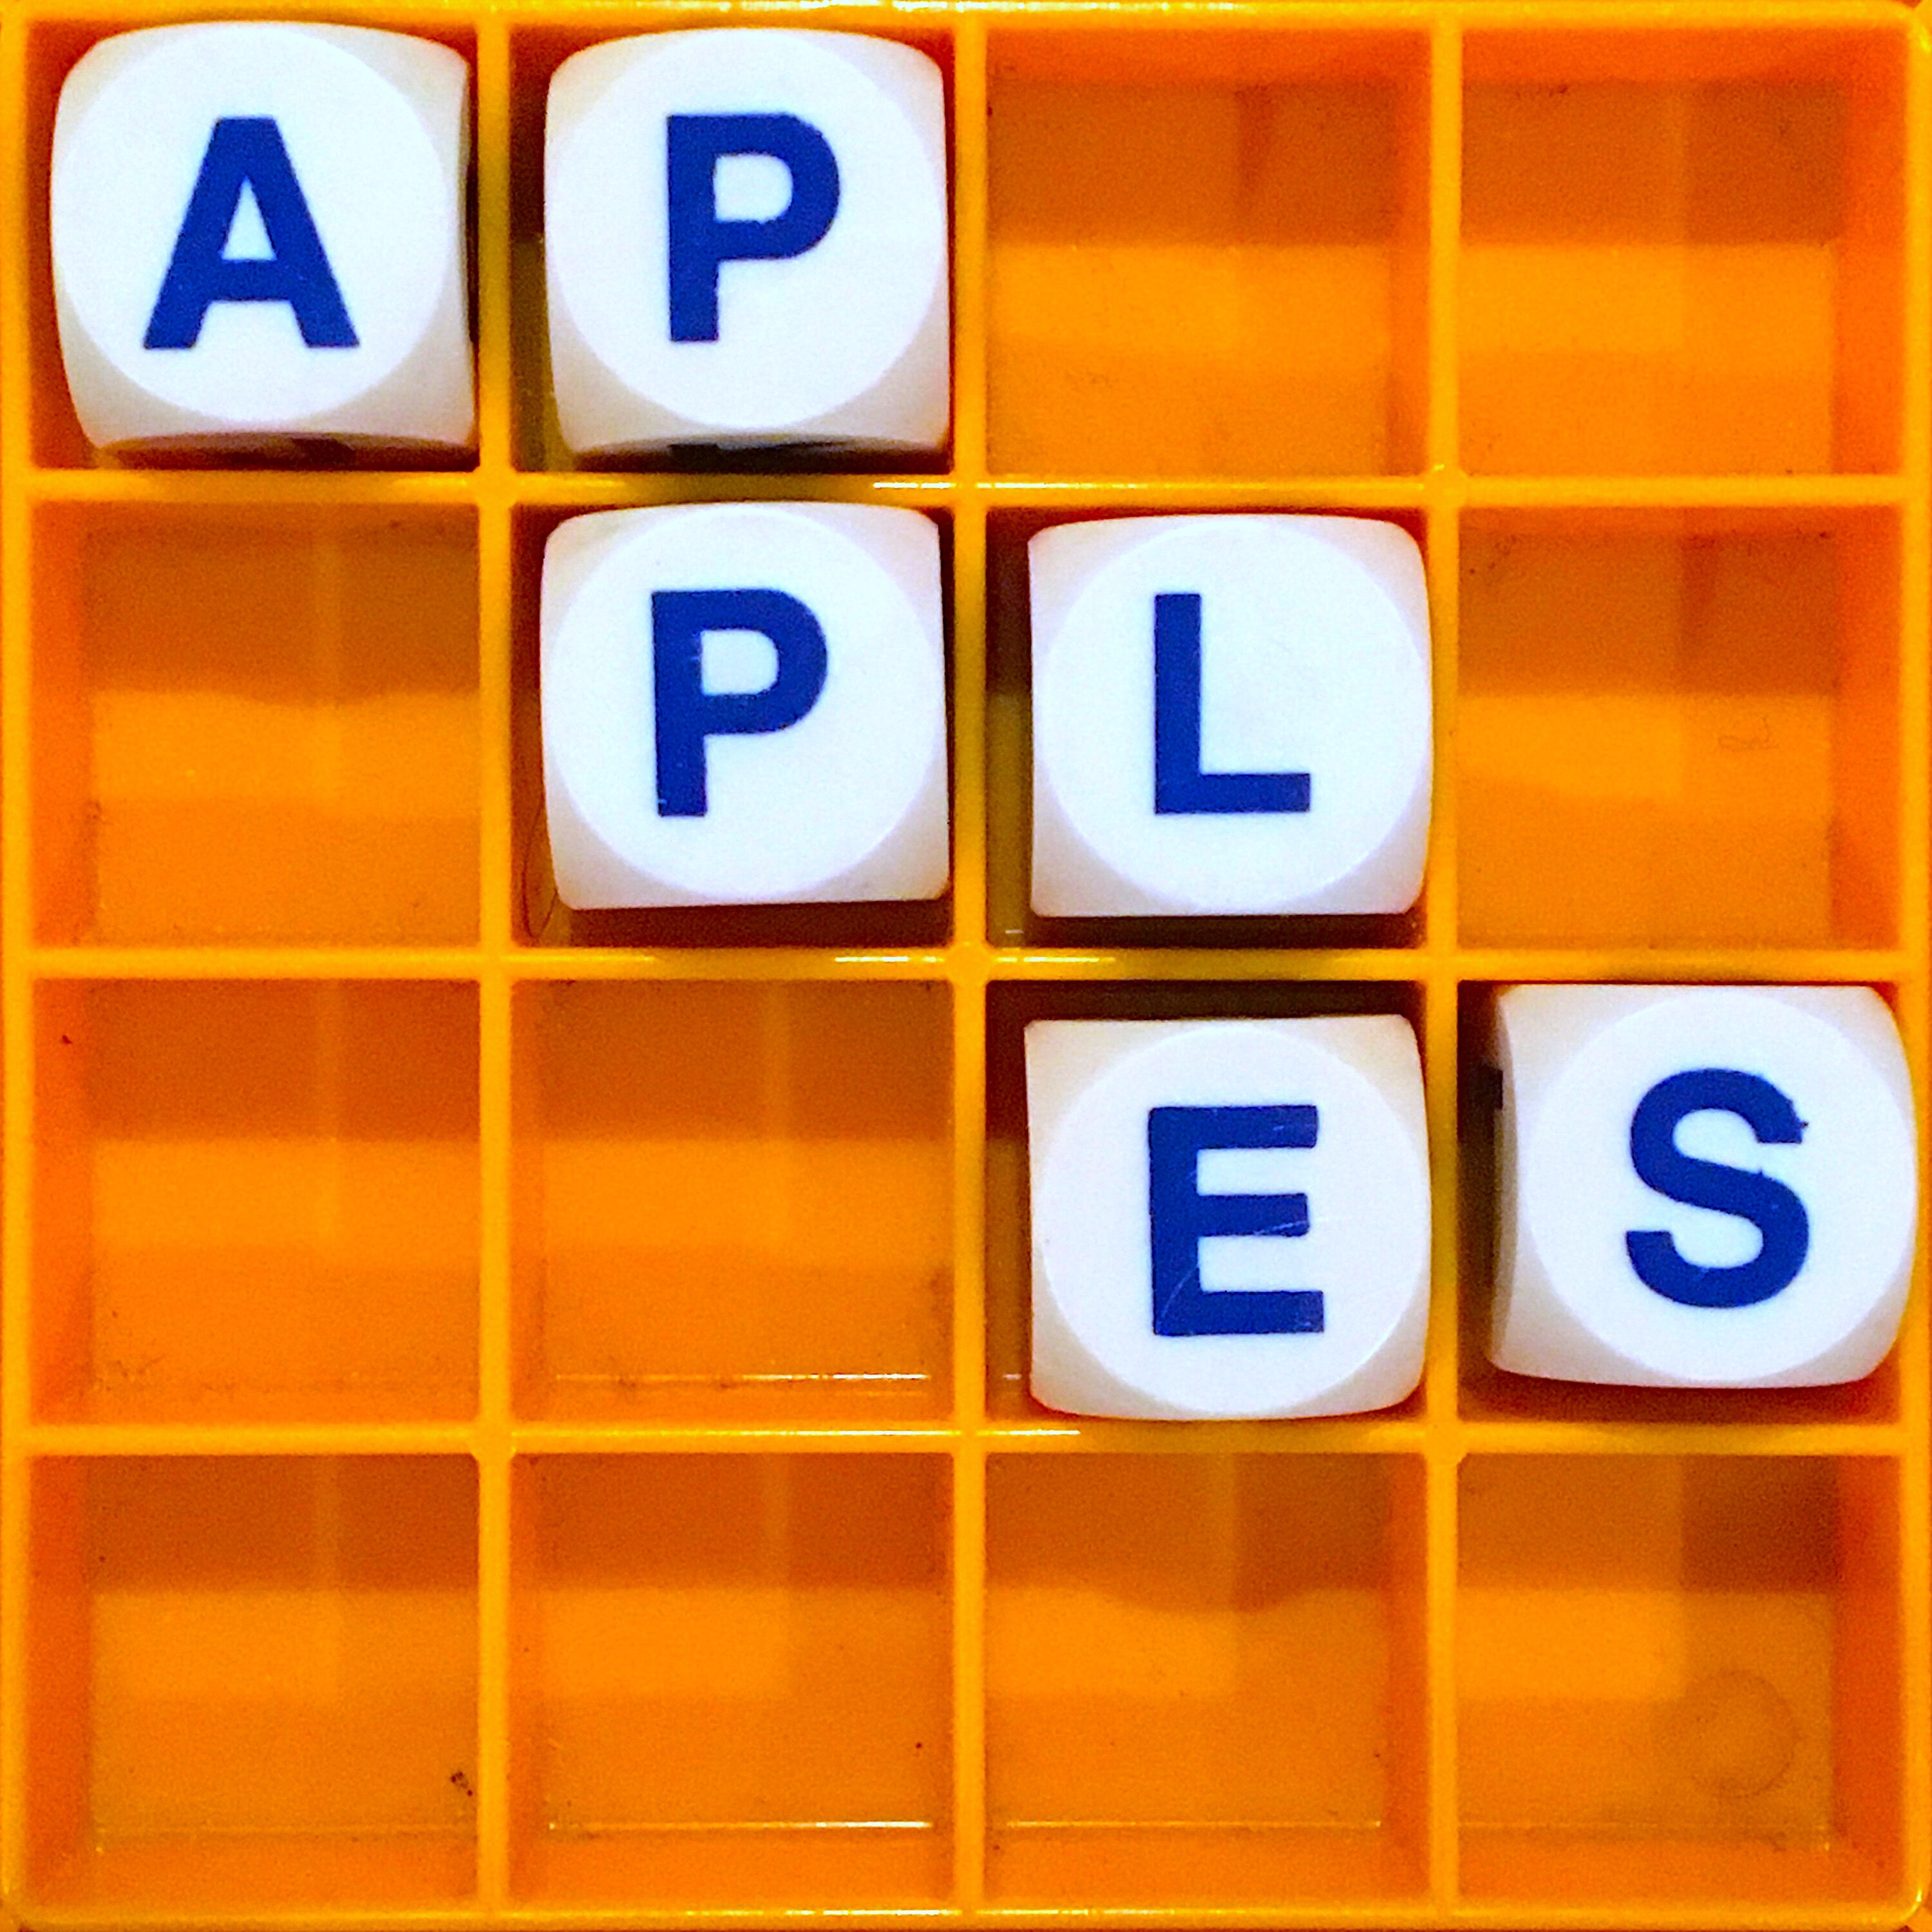 Thumbnail for "107. Apples".